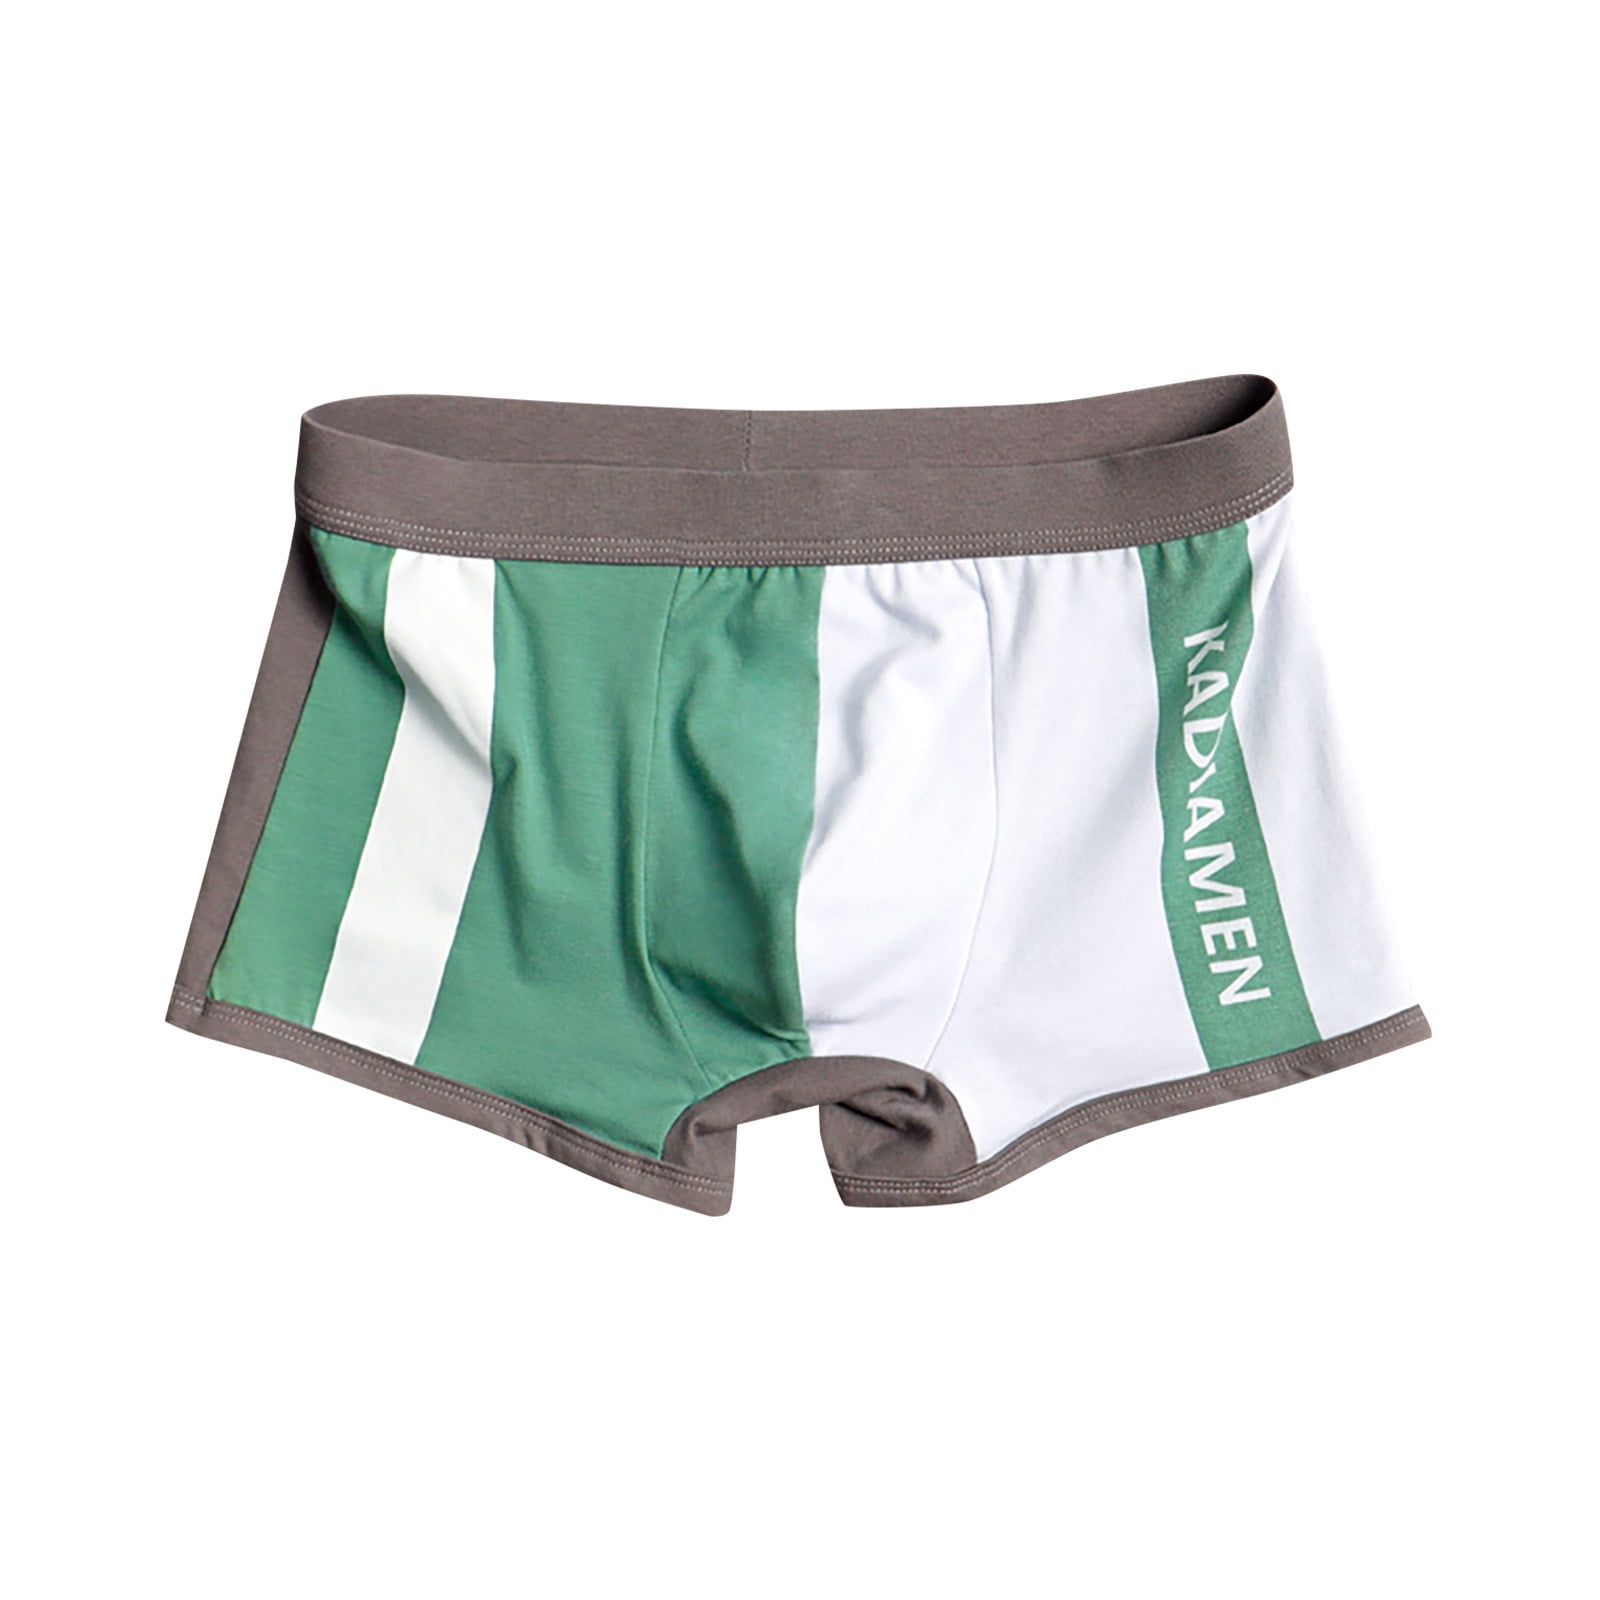 Hanes Ultimate Utility Pocket Men's Boxer Brief Underwear, X-Temp, 4-Pack